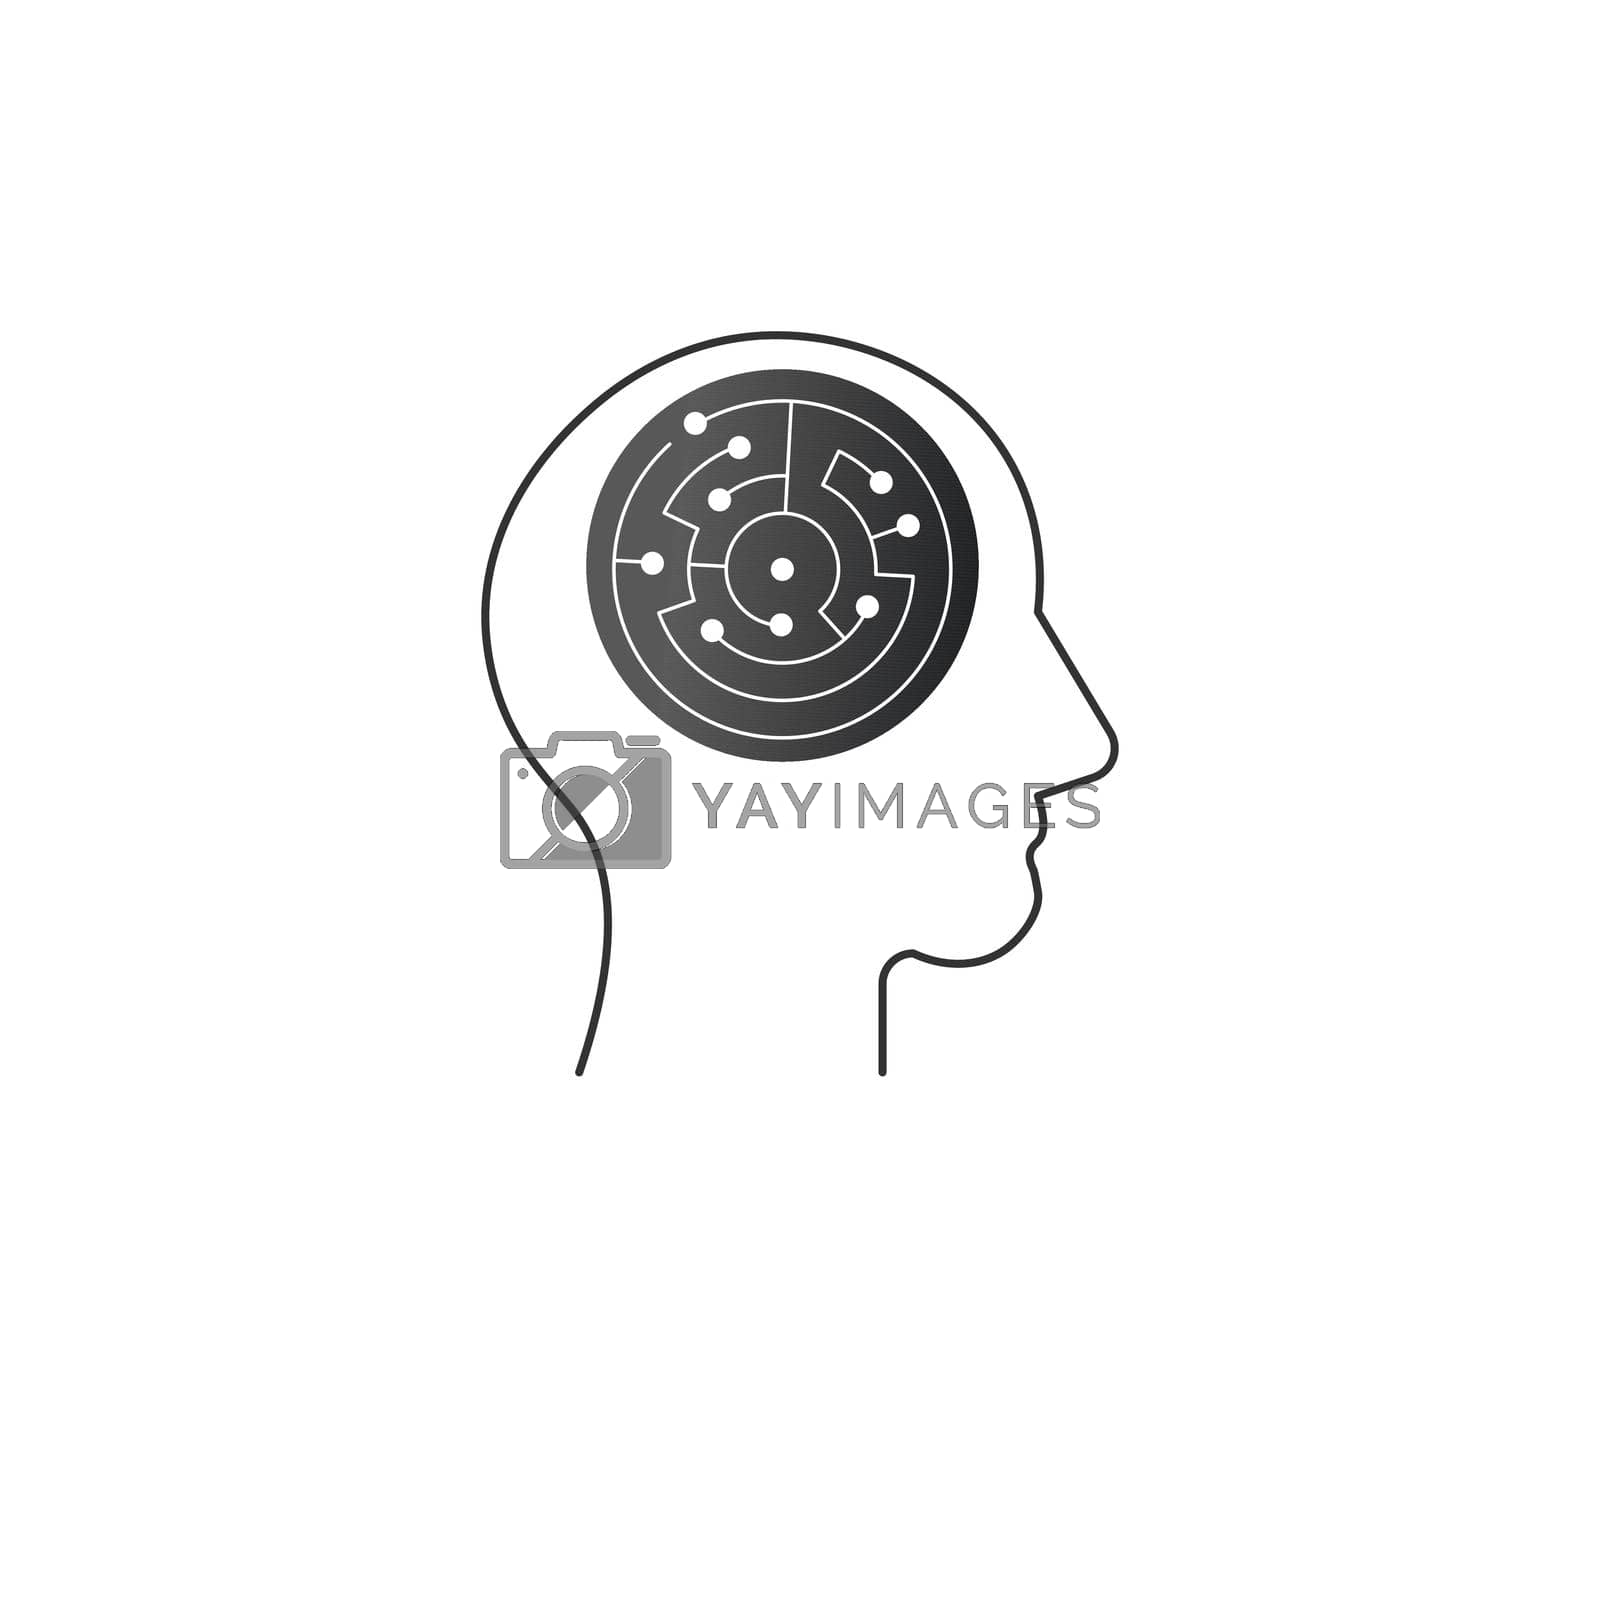 Royalty free image of Logic games concept, creative thinking, head maze line icon, mind labyrinth, mental work, strategic thinking, psychology vector logo. by Kyrylov